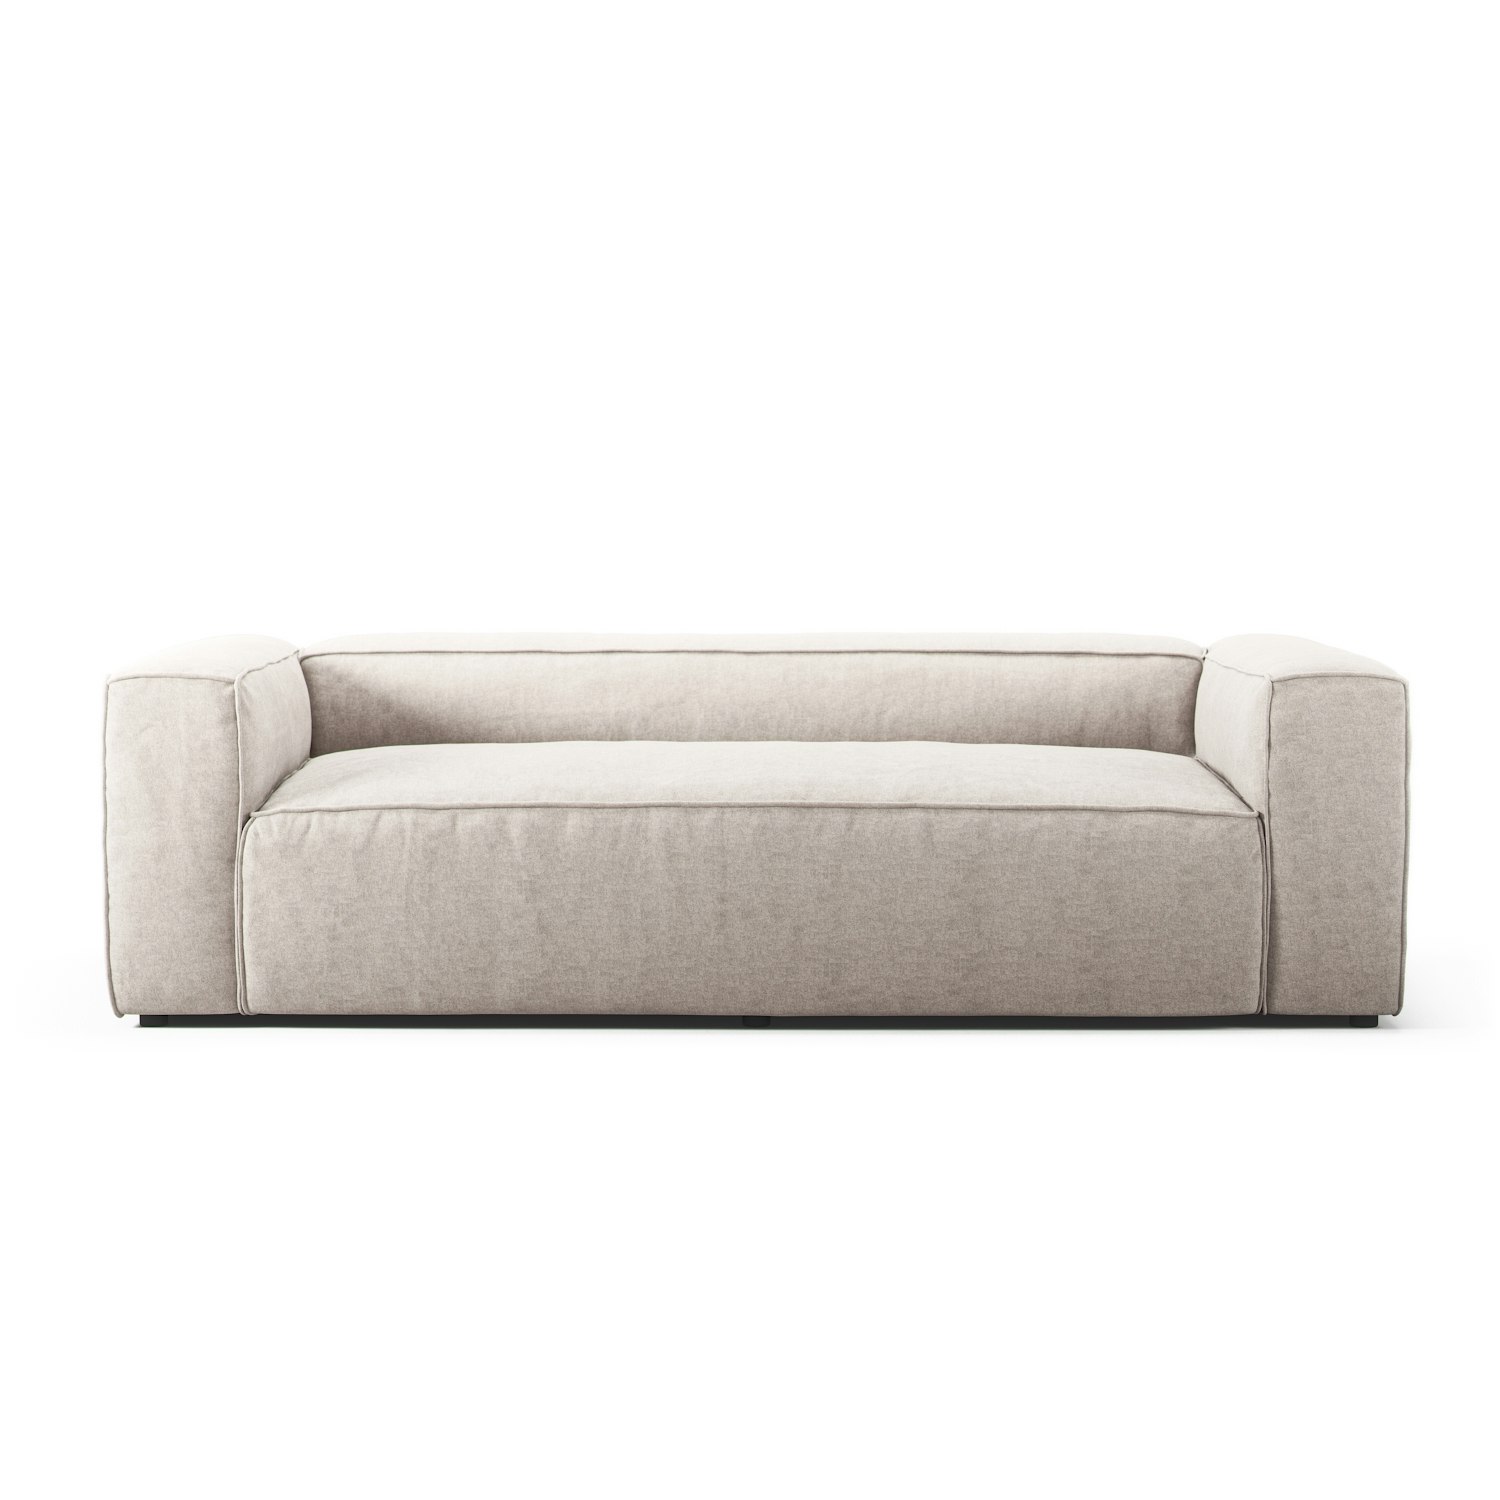 Grand Sofa 2-Seater, Sandshell Beige - Decotique @ RoyalDesign